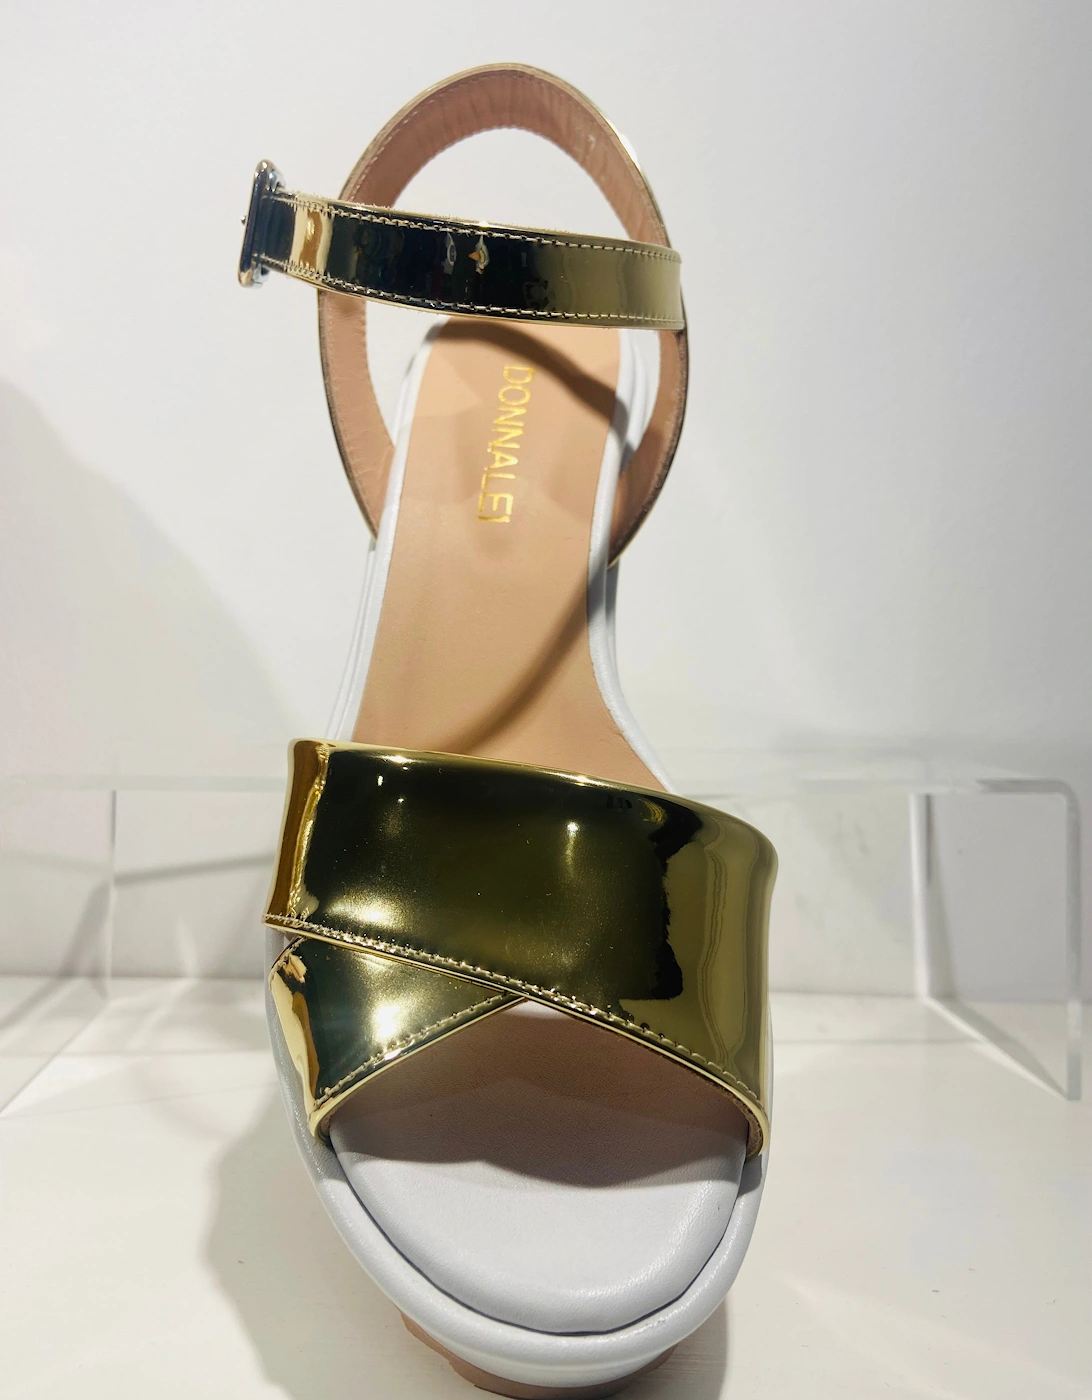 Mirrored gold wedge sandal